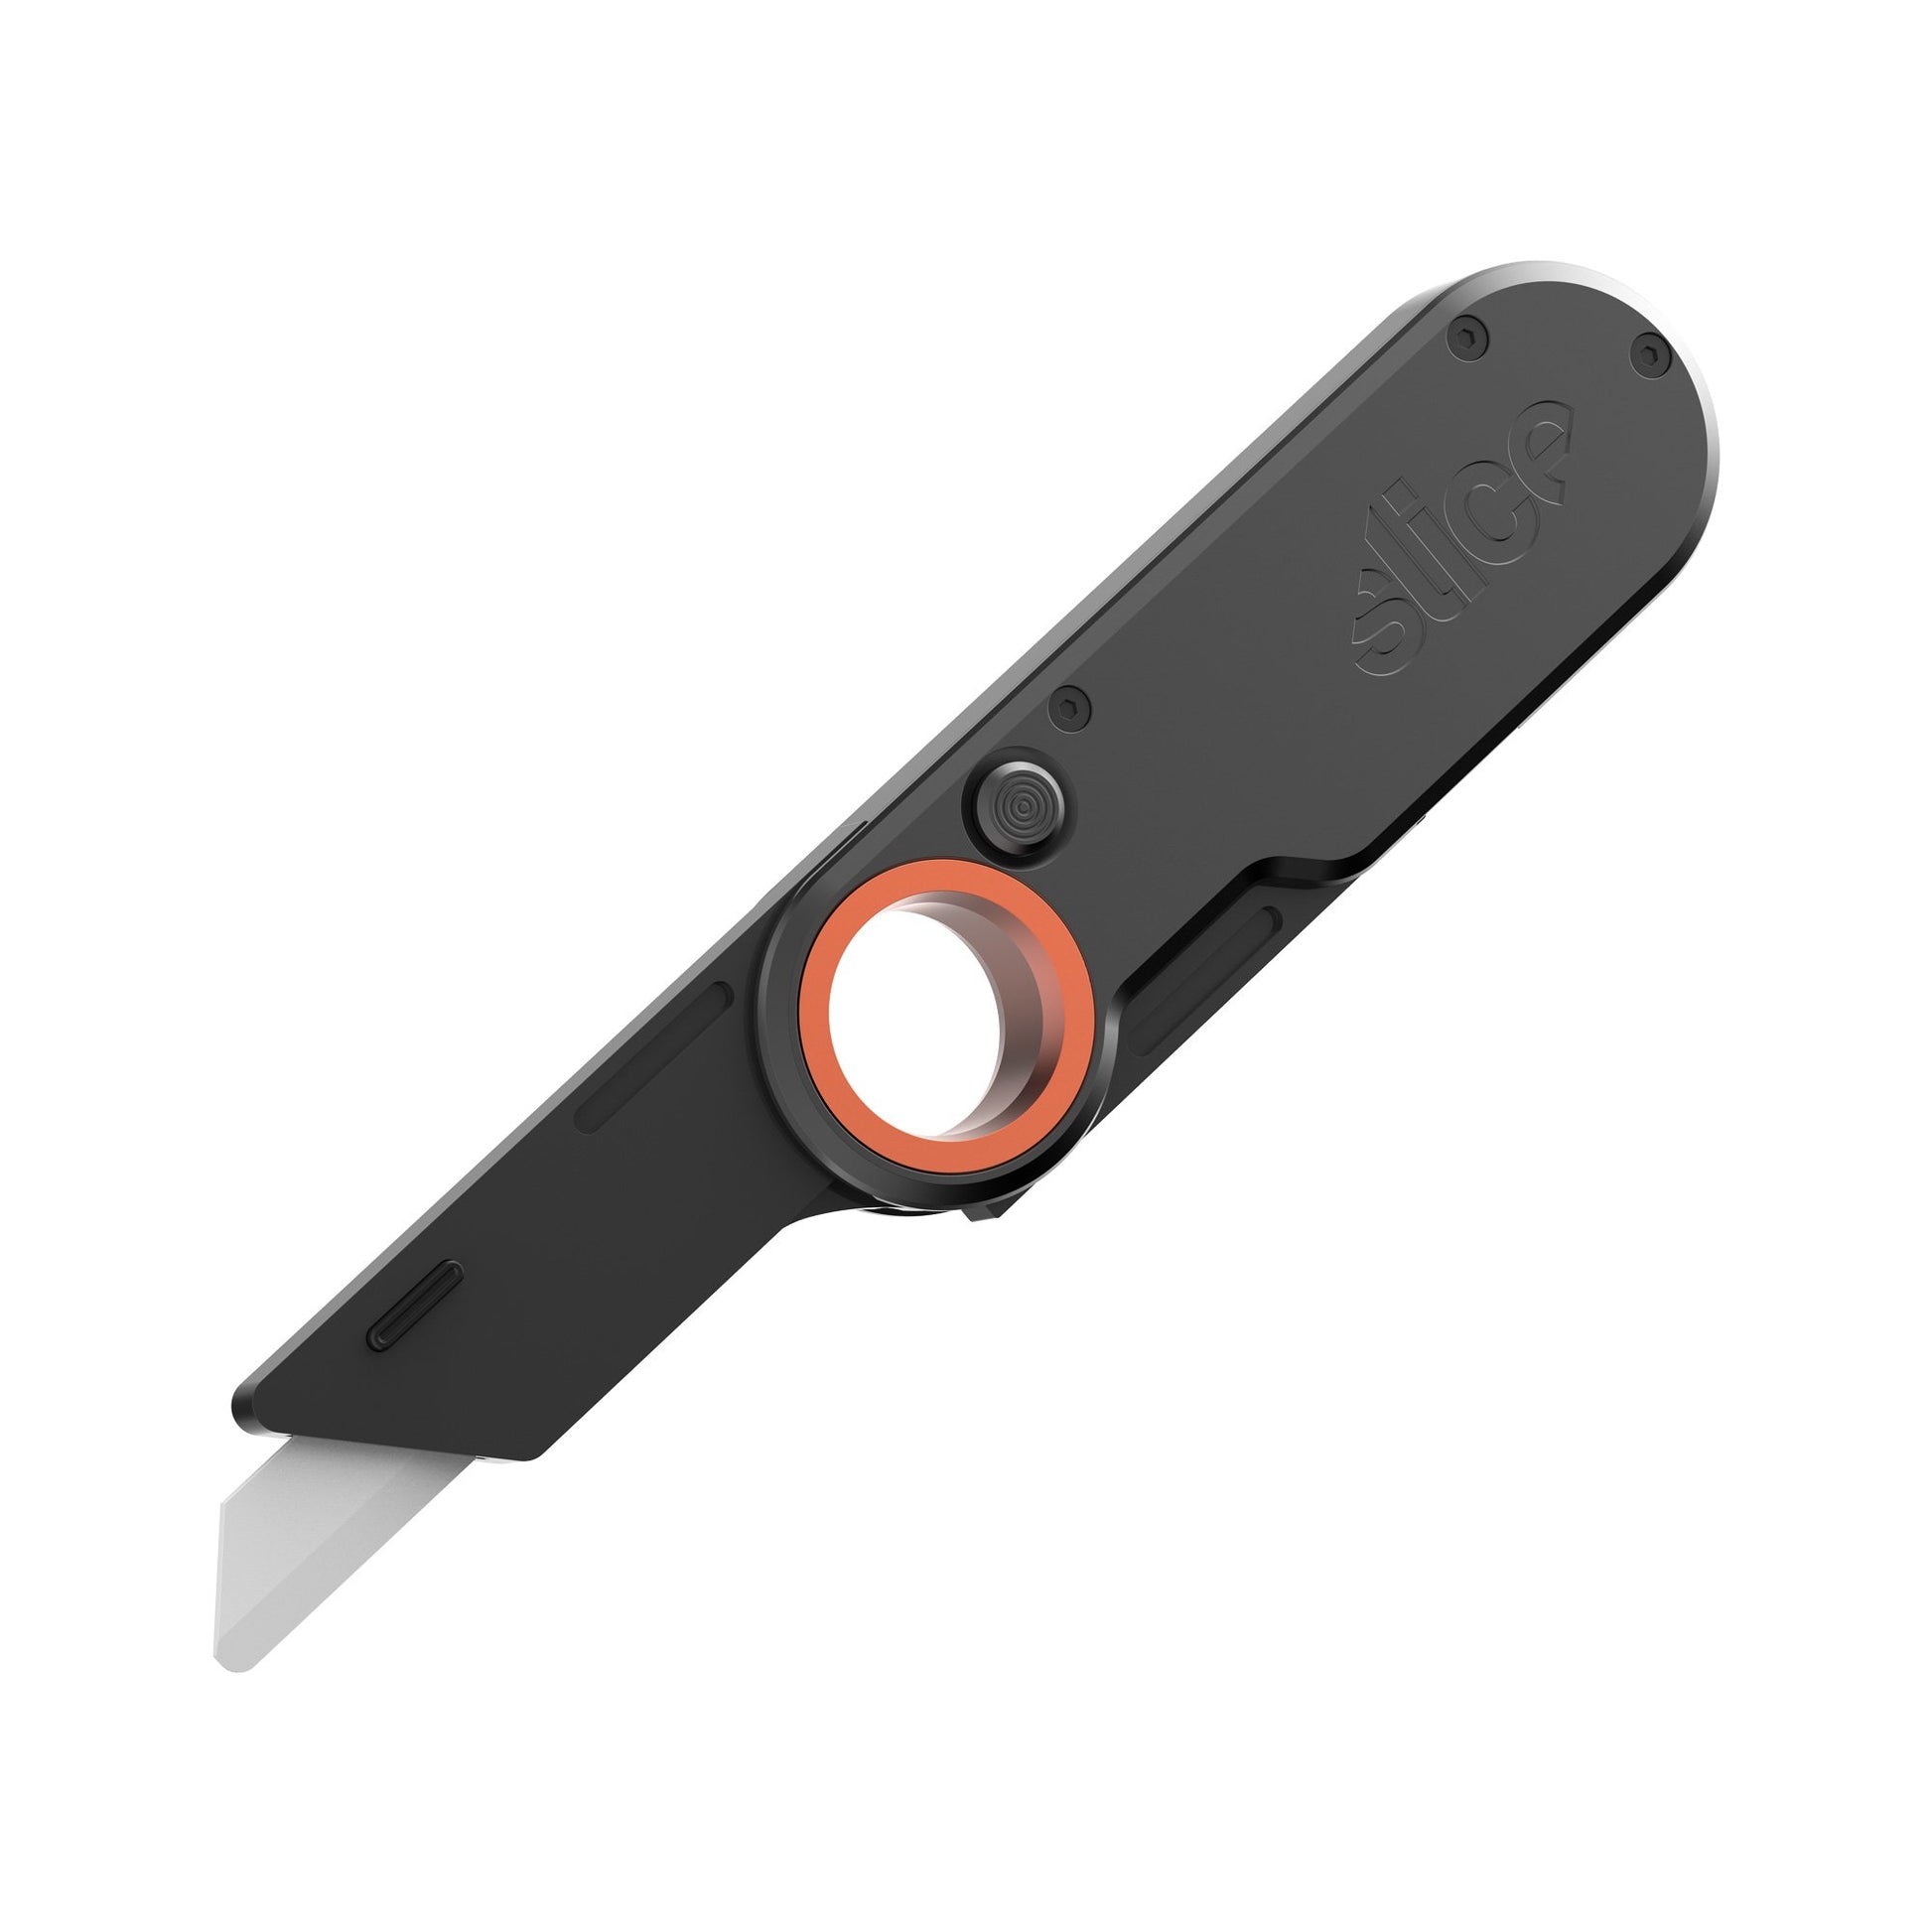 The Slice® 10562 Folding Utility Knife